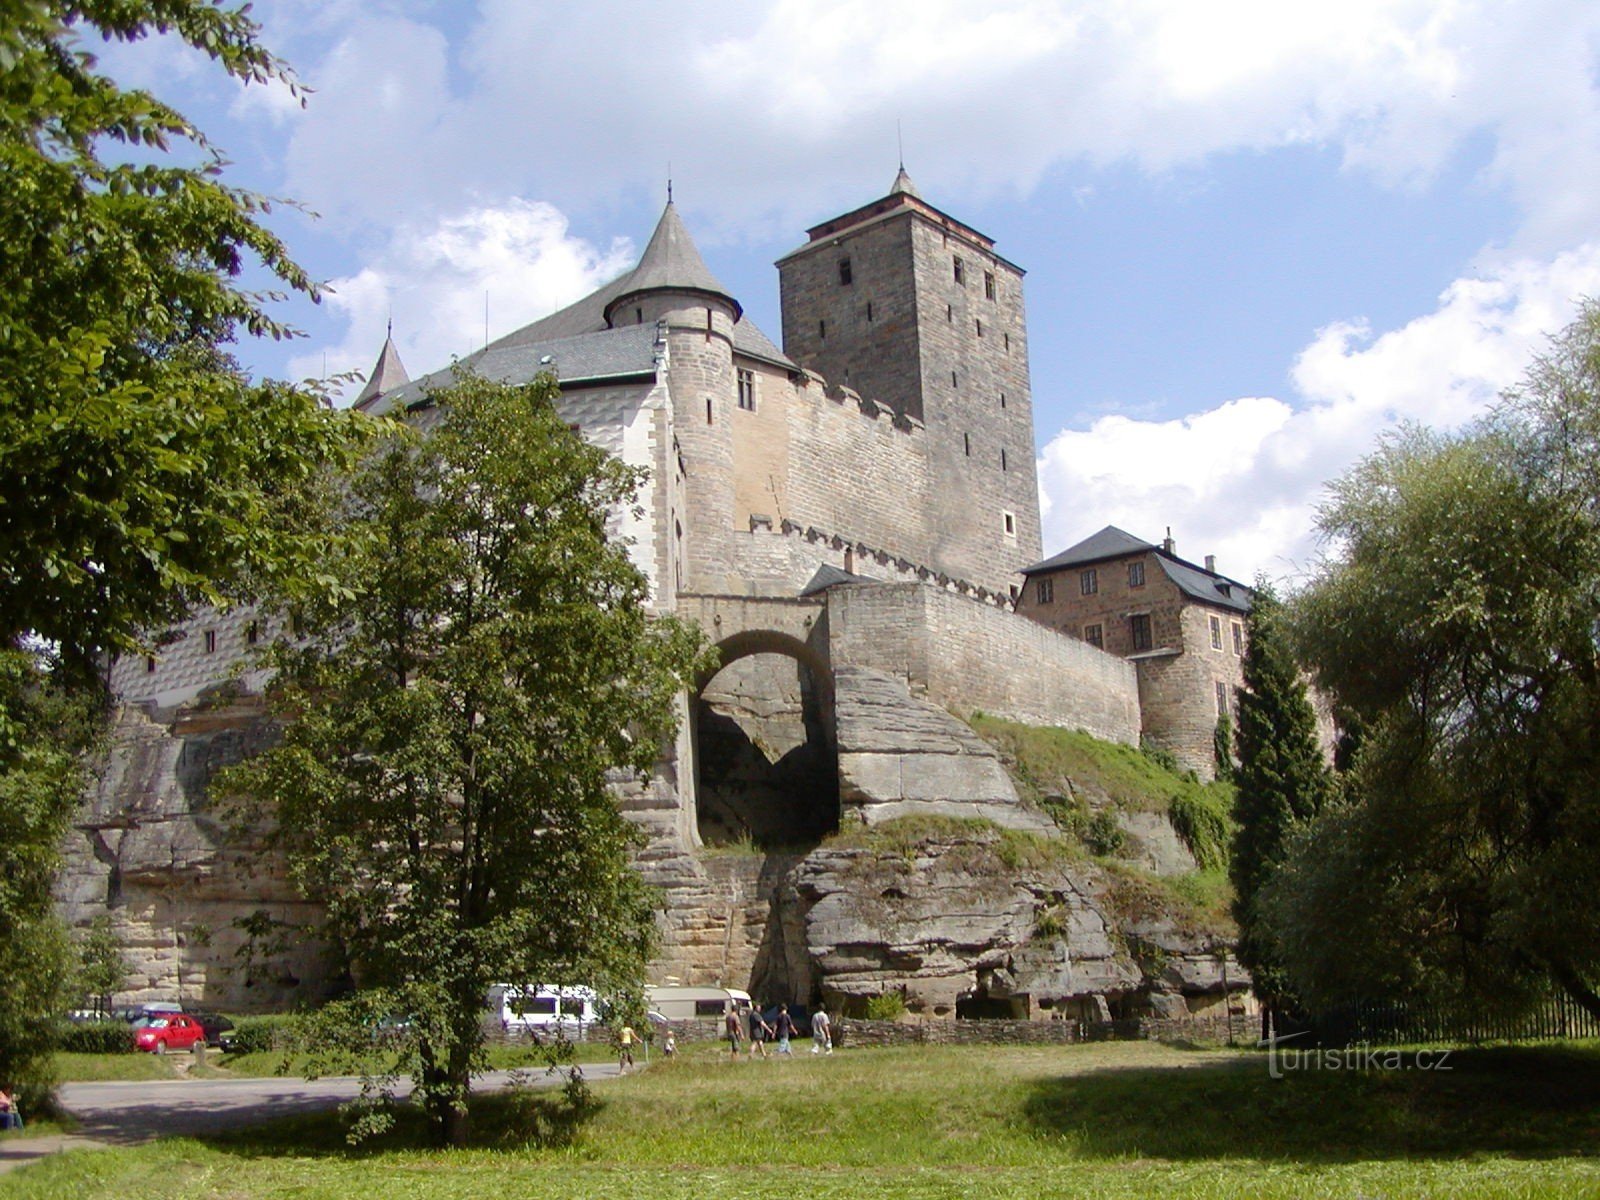 Dvorac Kost od Plakánek